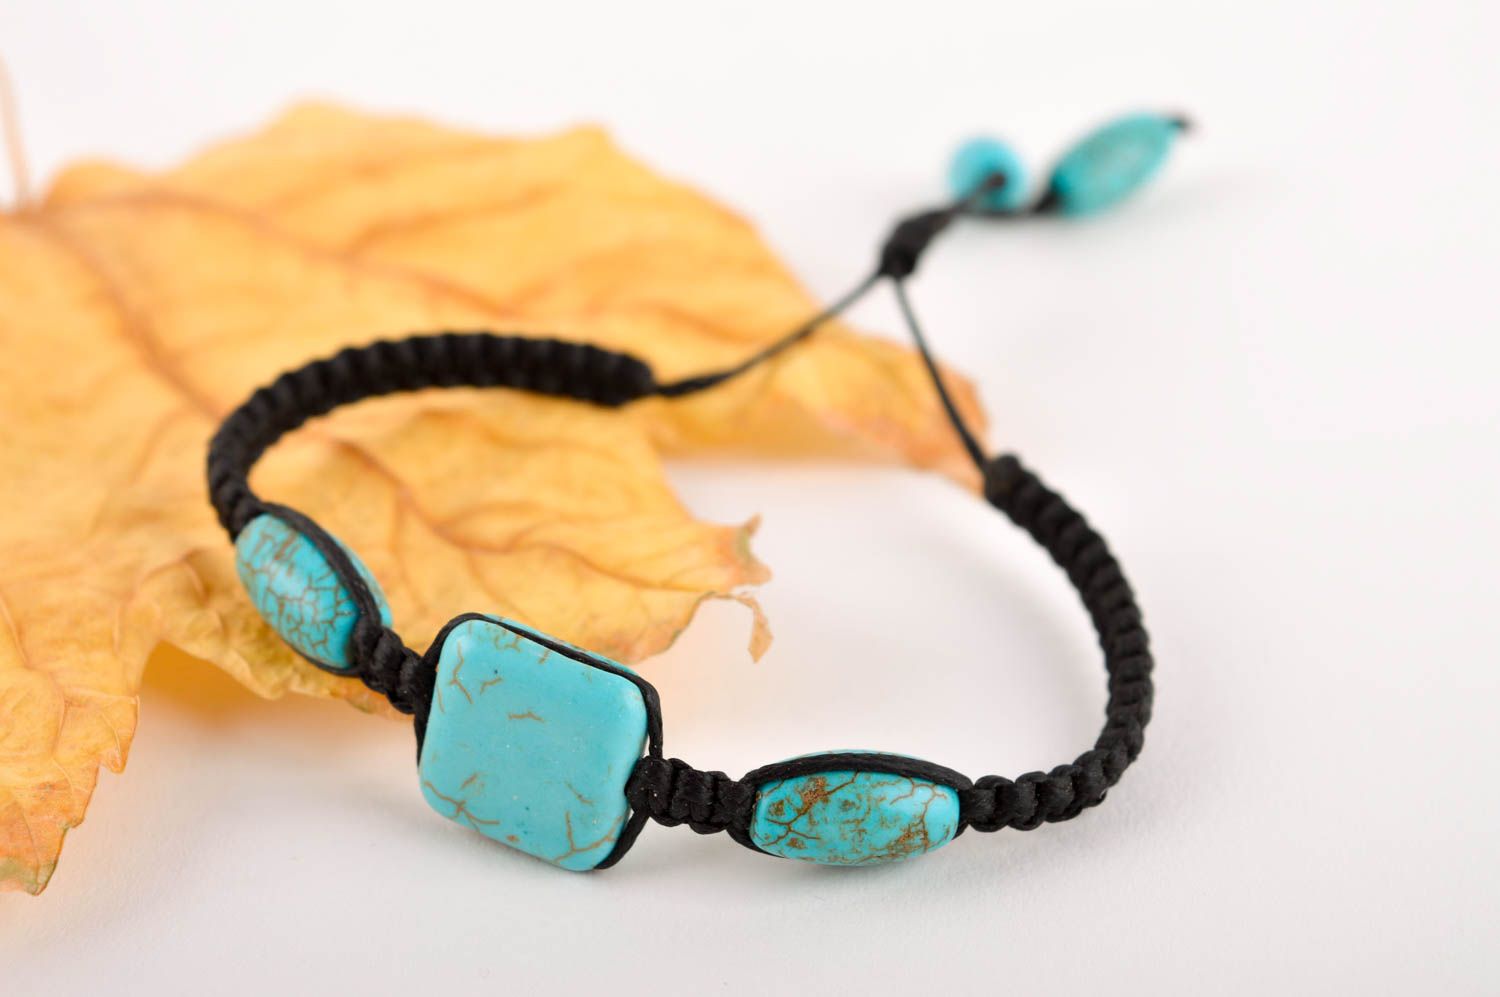 Unusual handmade macrame bracelet gemstone bracelet designs gifts for her photo 1